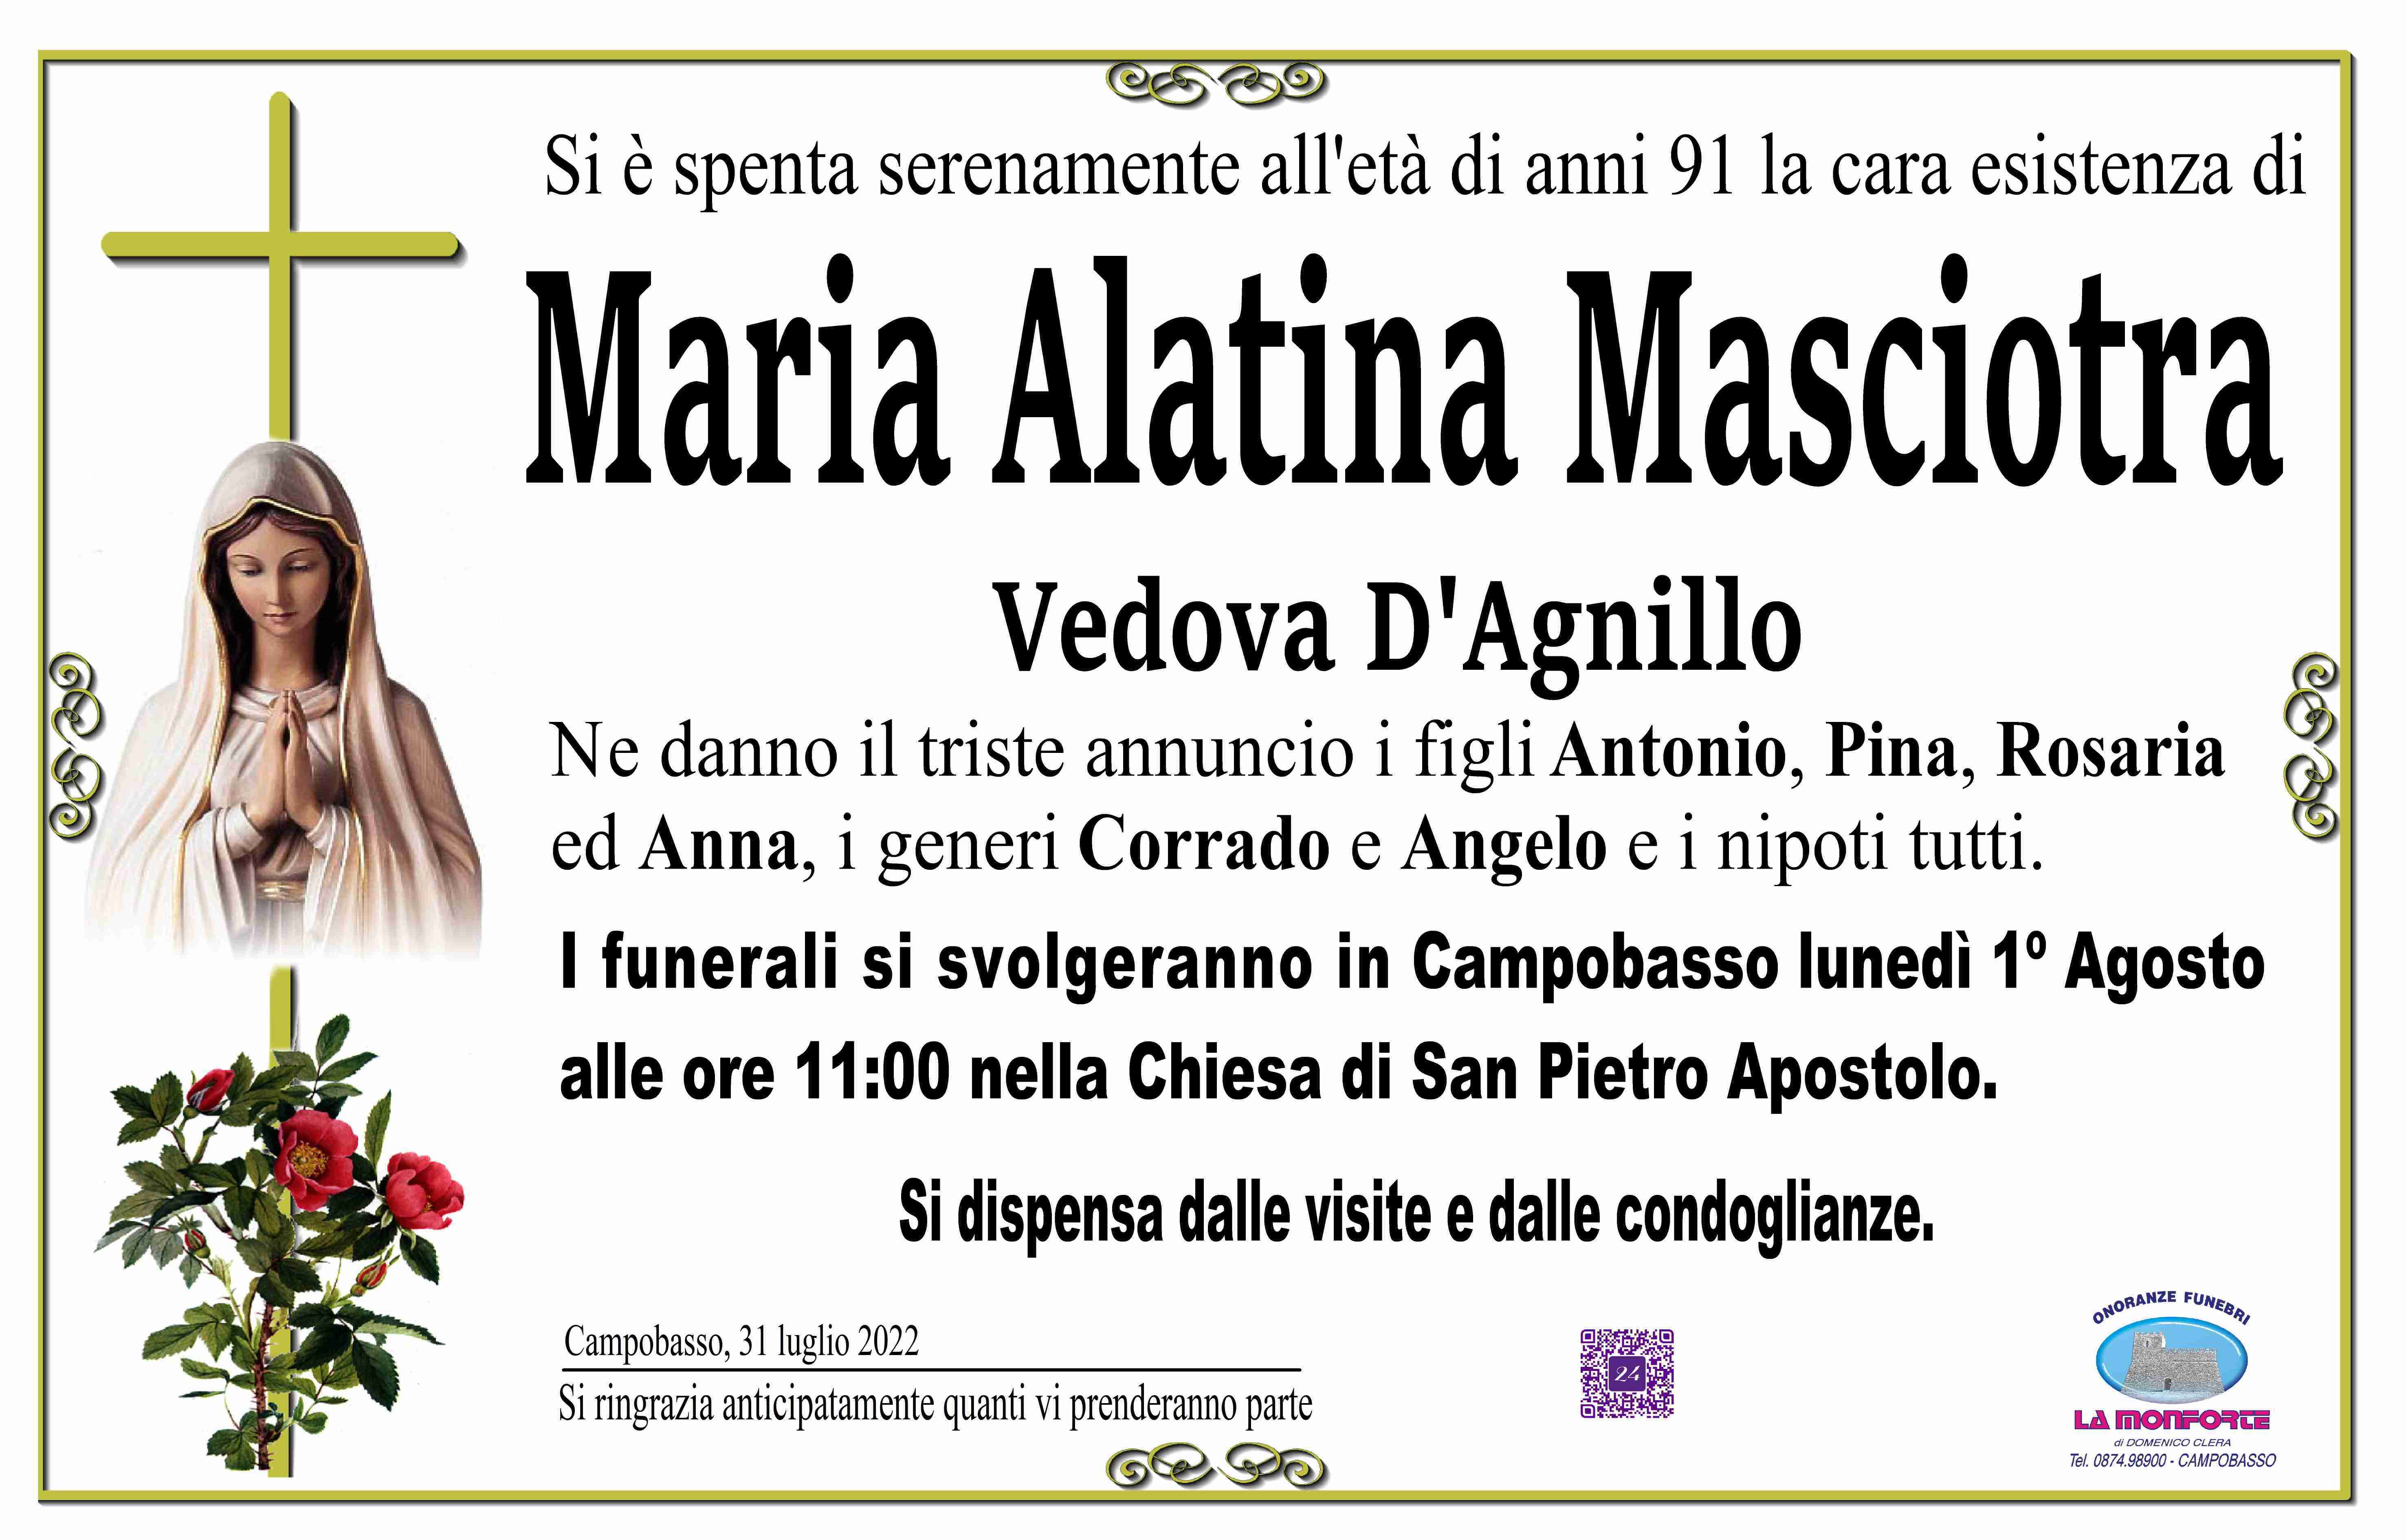 Maria Alatina Masciotra